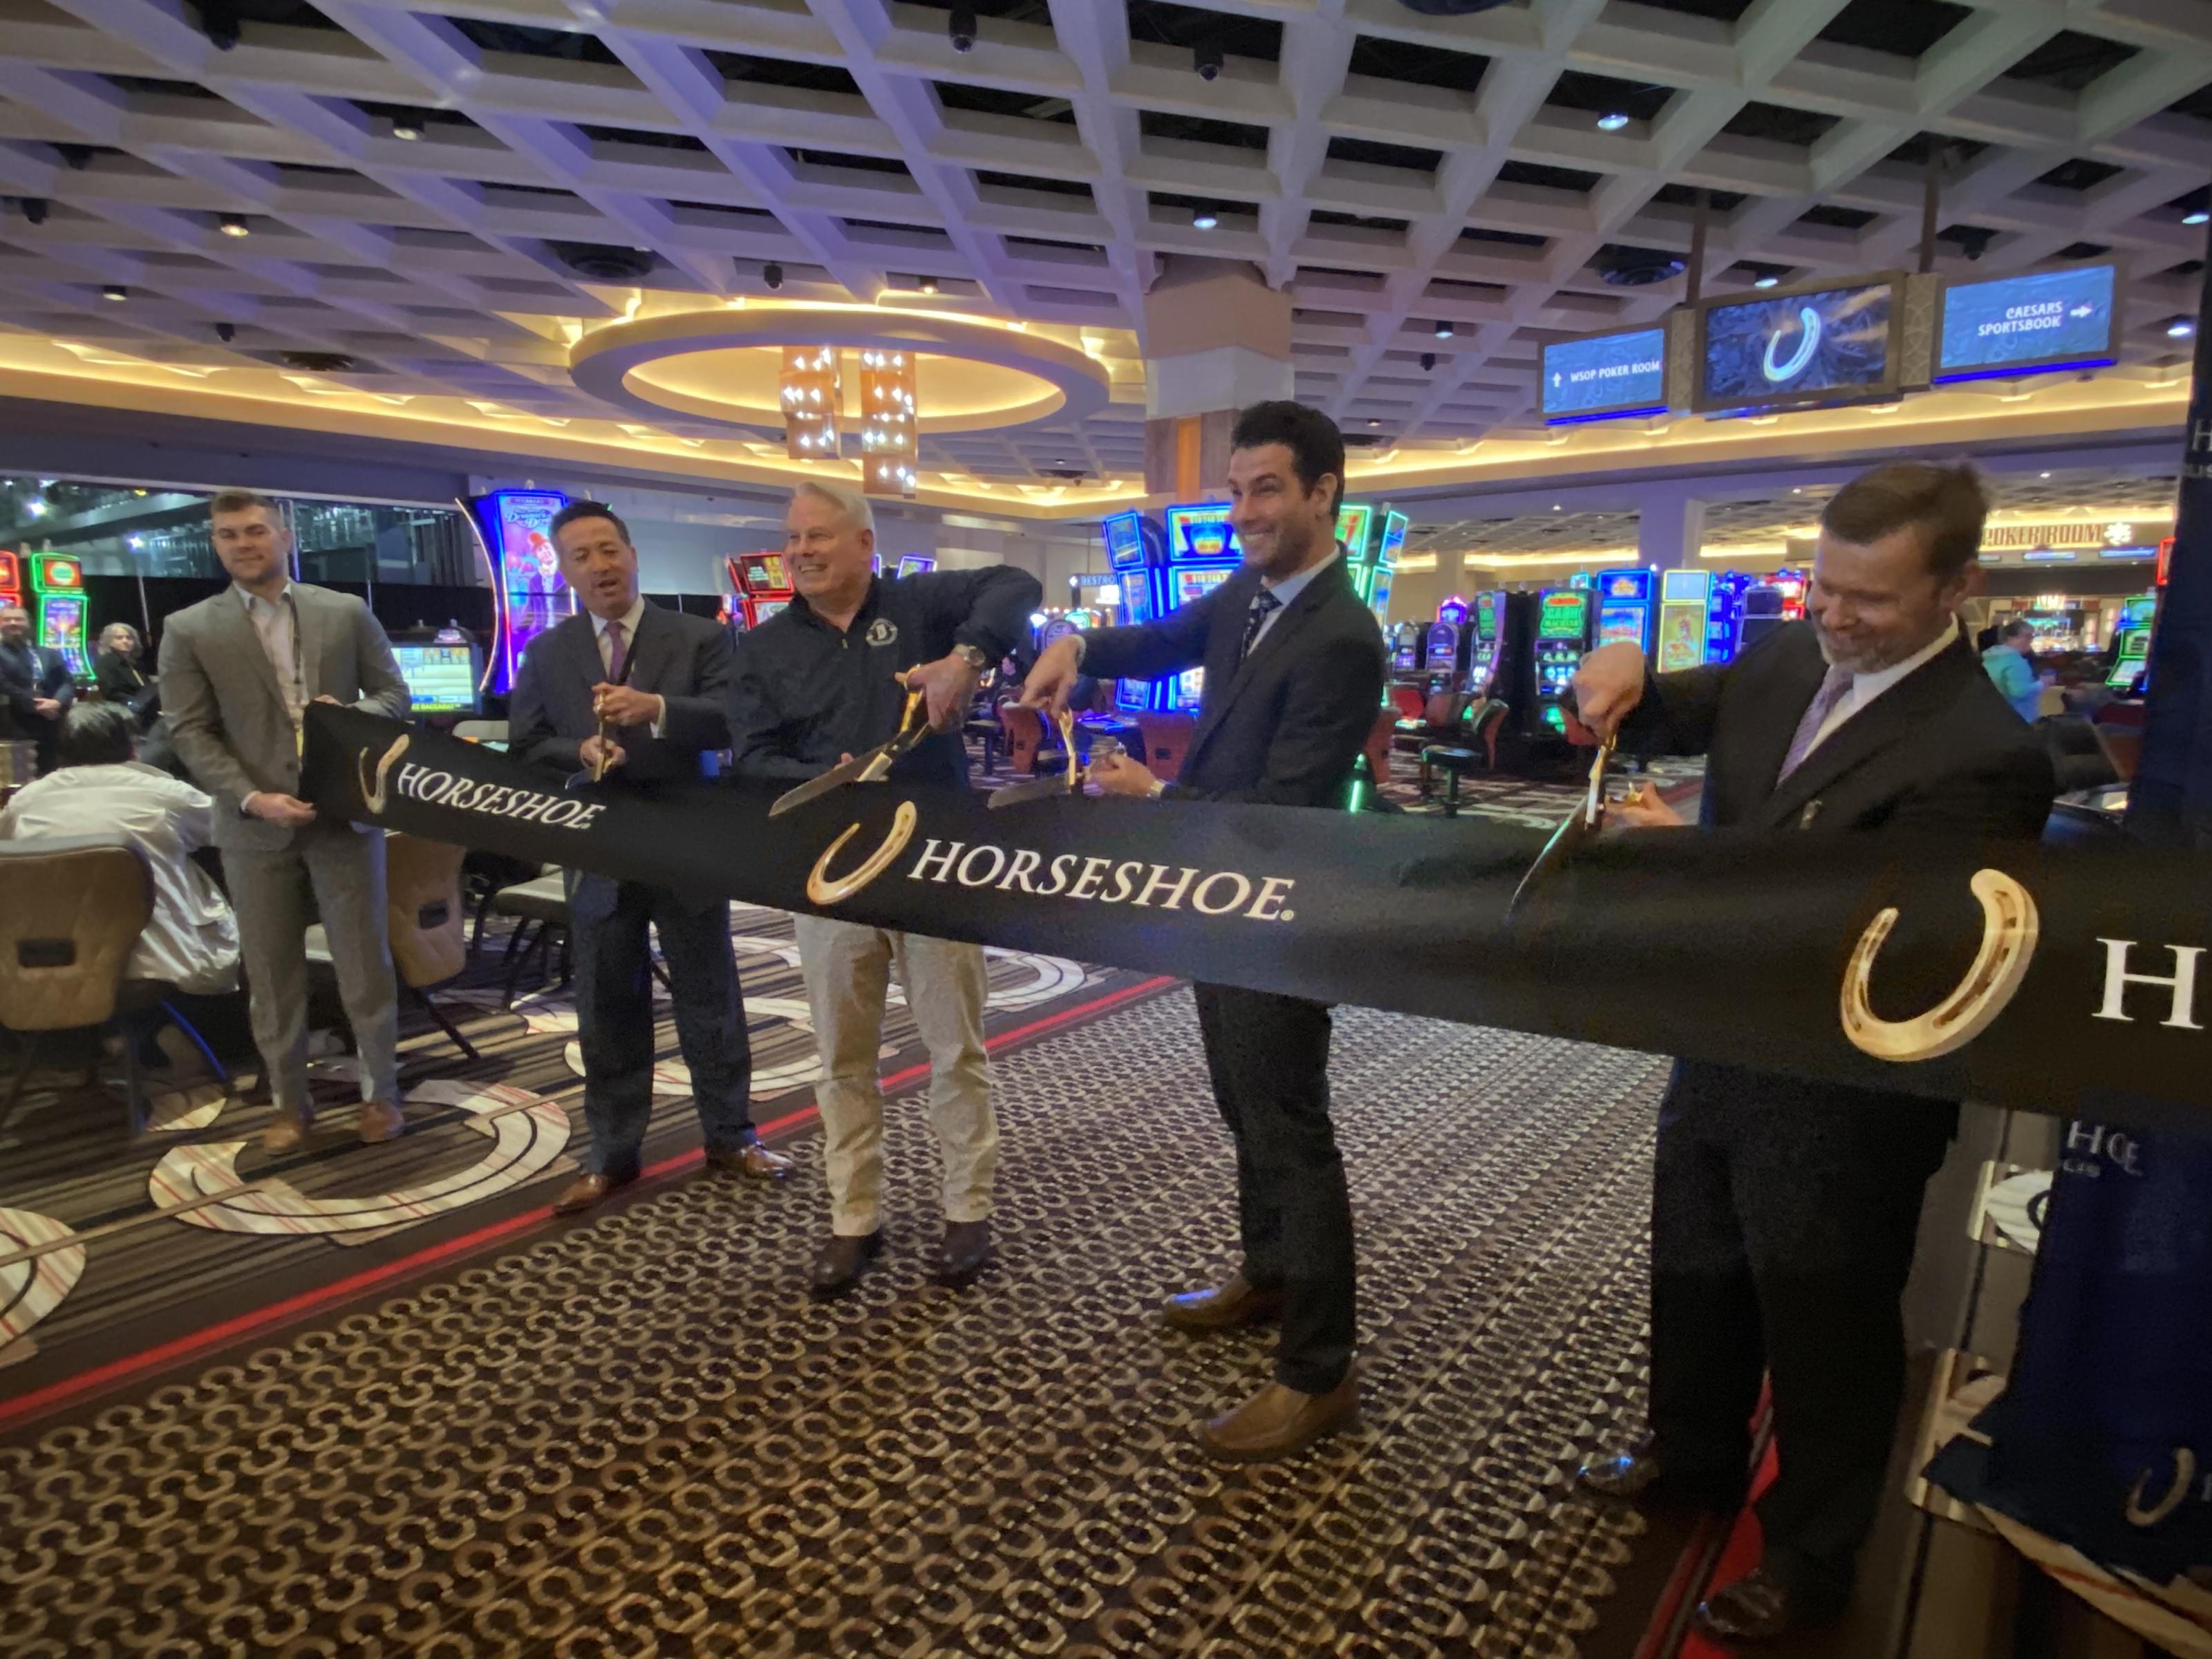 Rebranding brings Horseshoe Casino to central Indiana